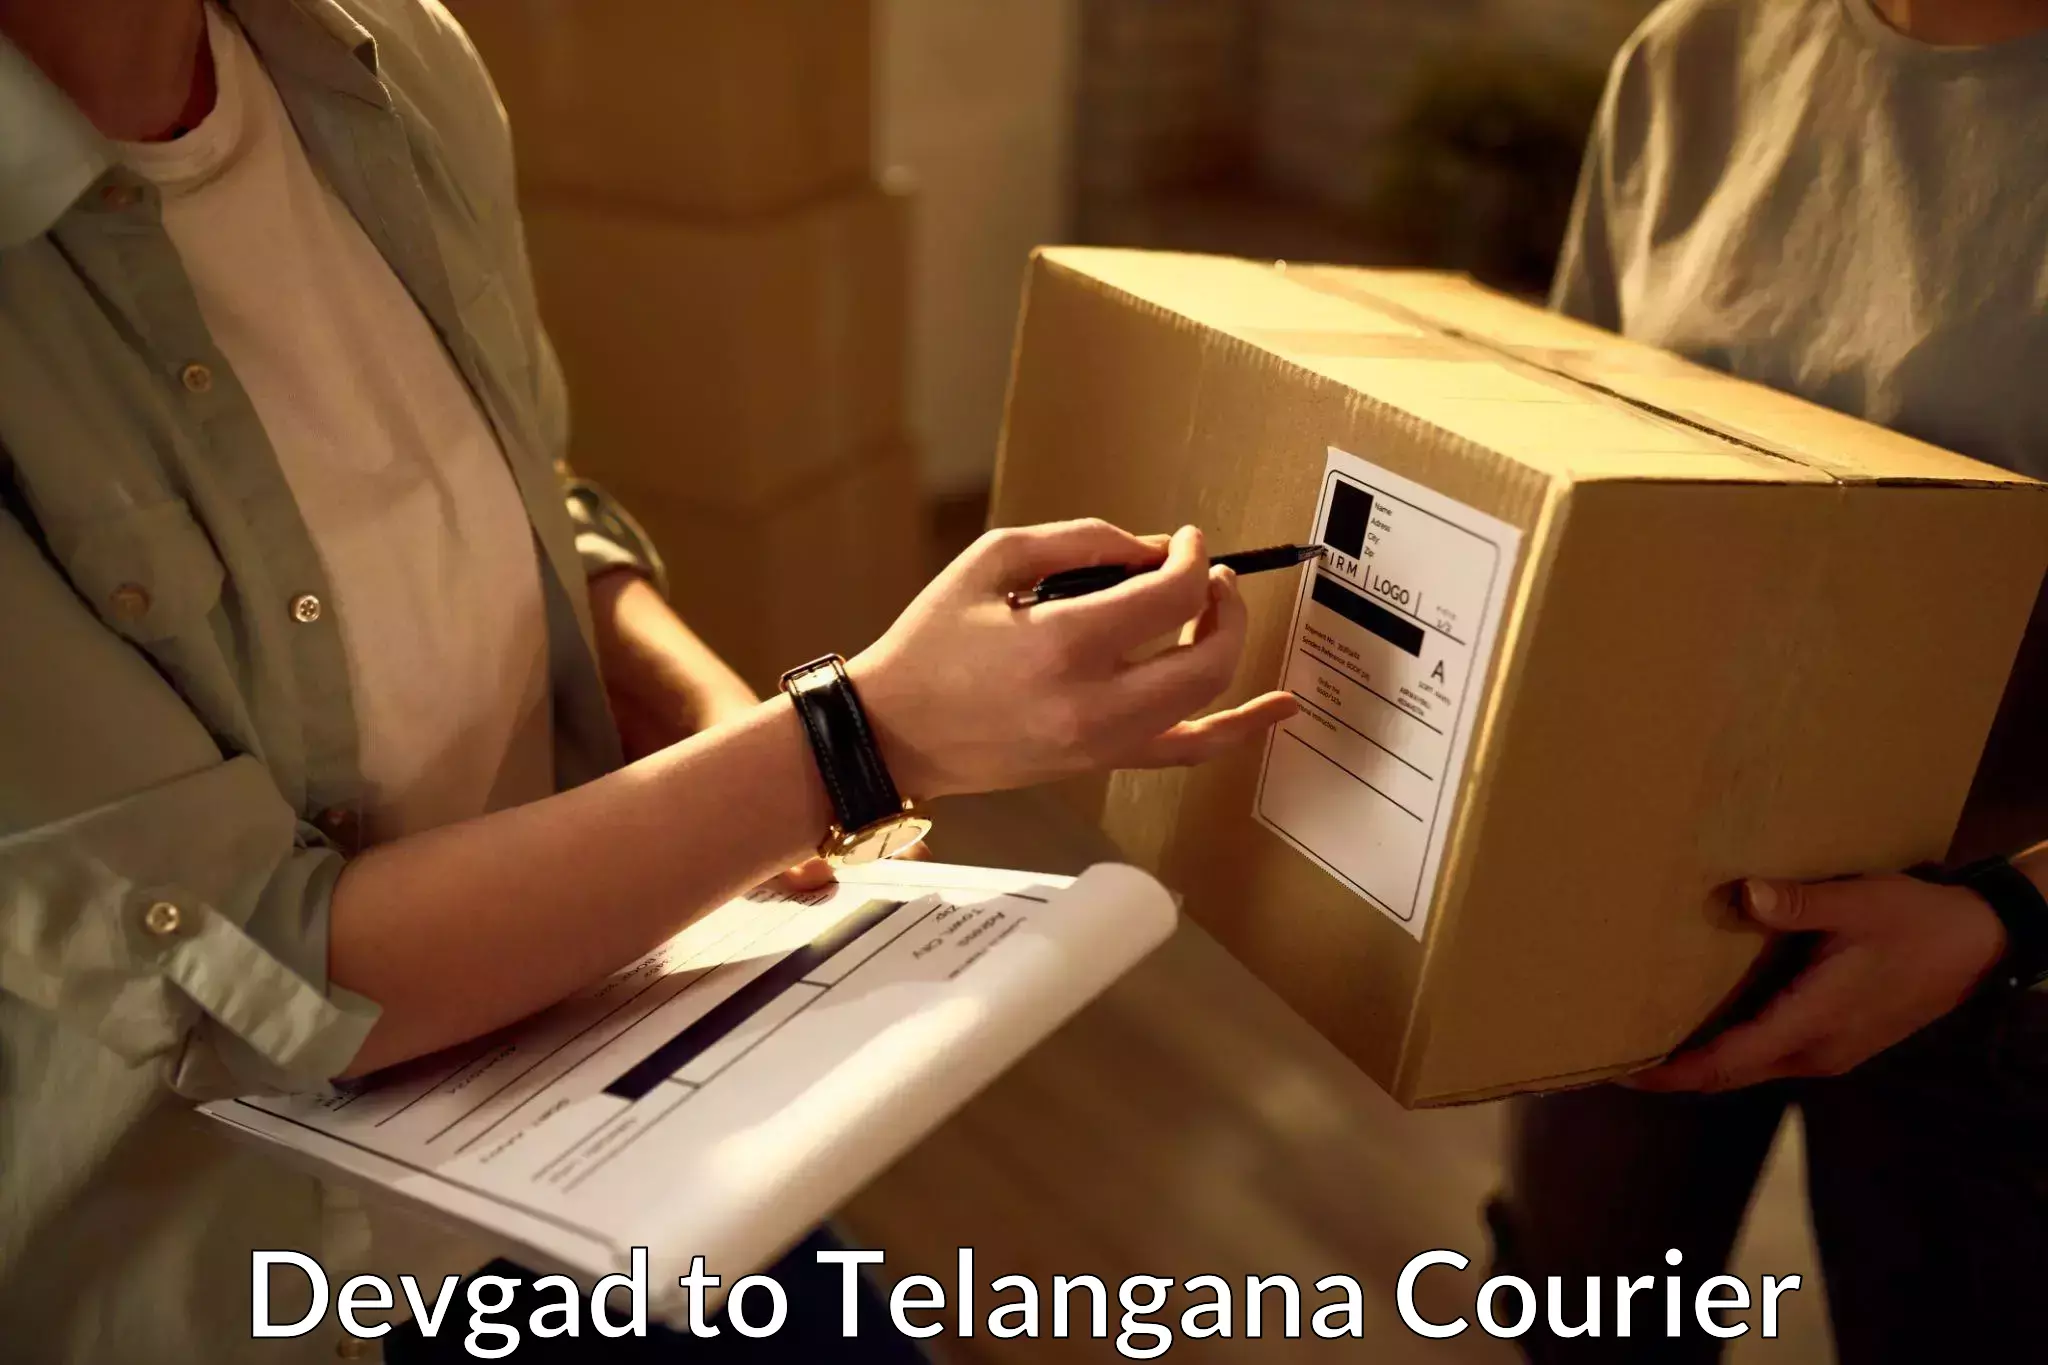 Express package transport in Devgad to Telangana